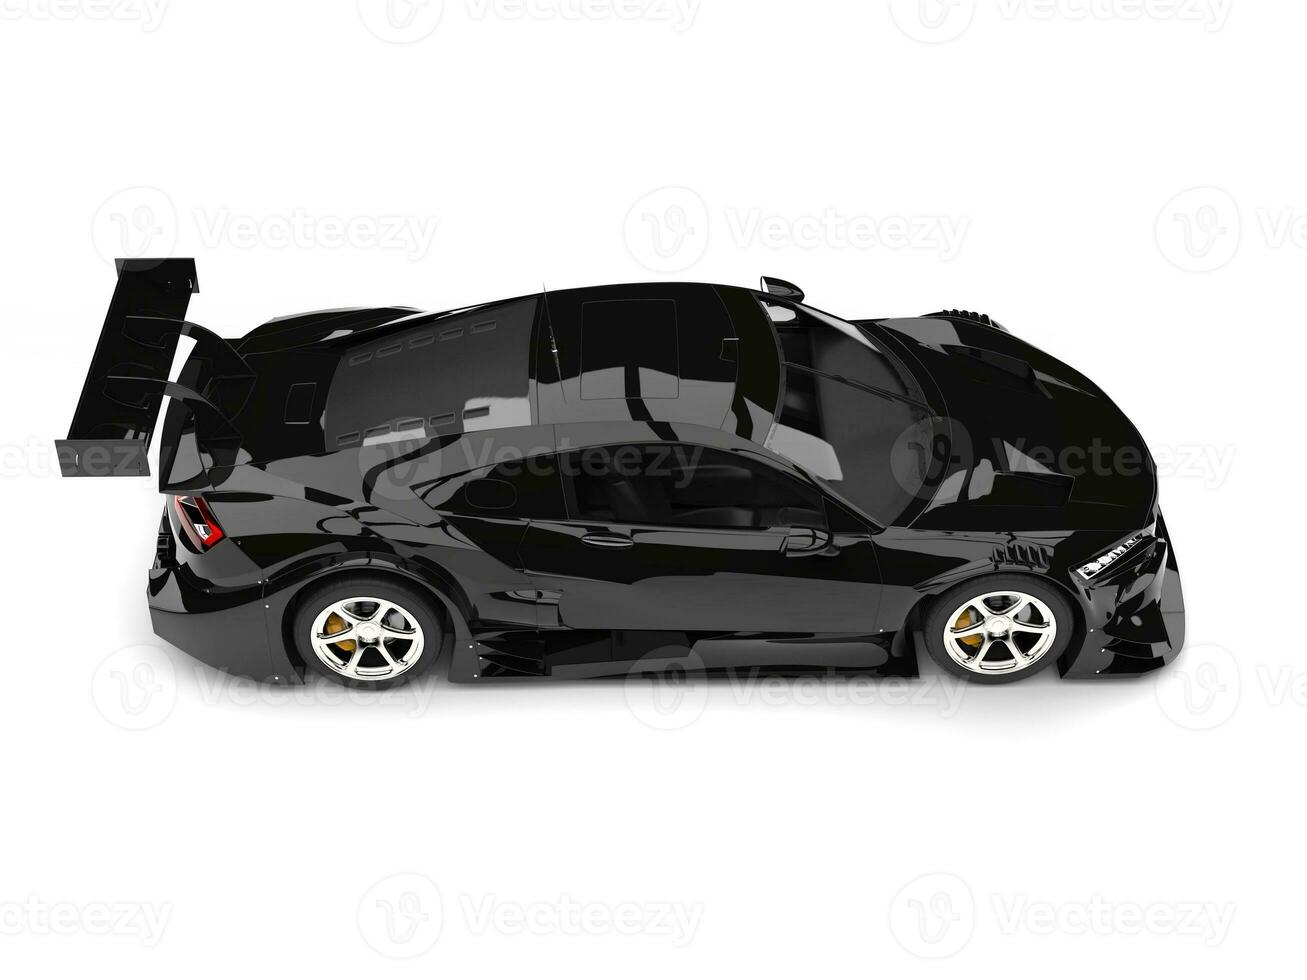 Cool black sports super car - top down view photo